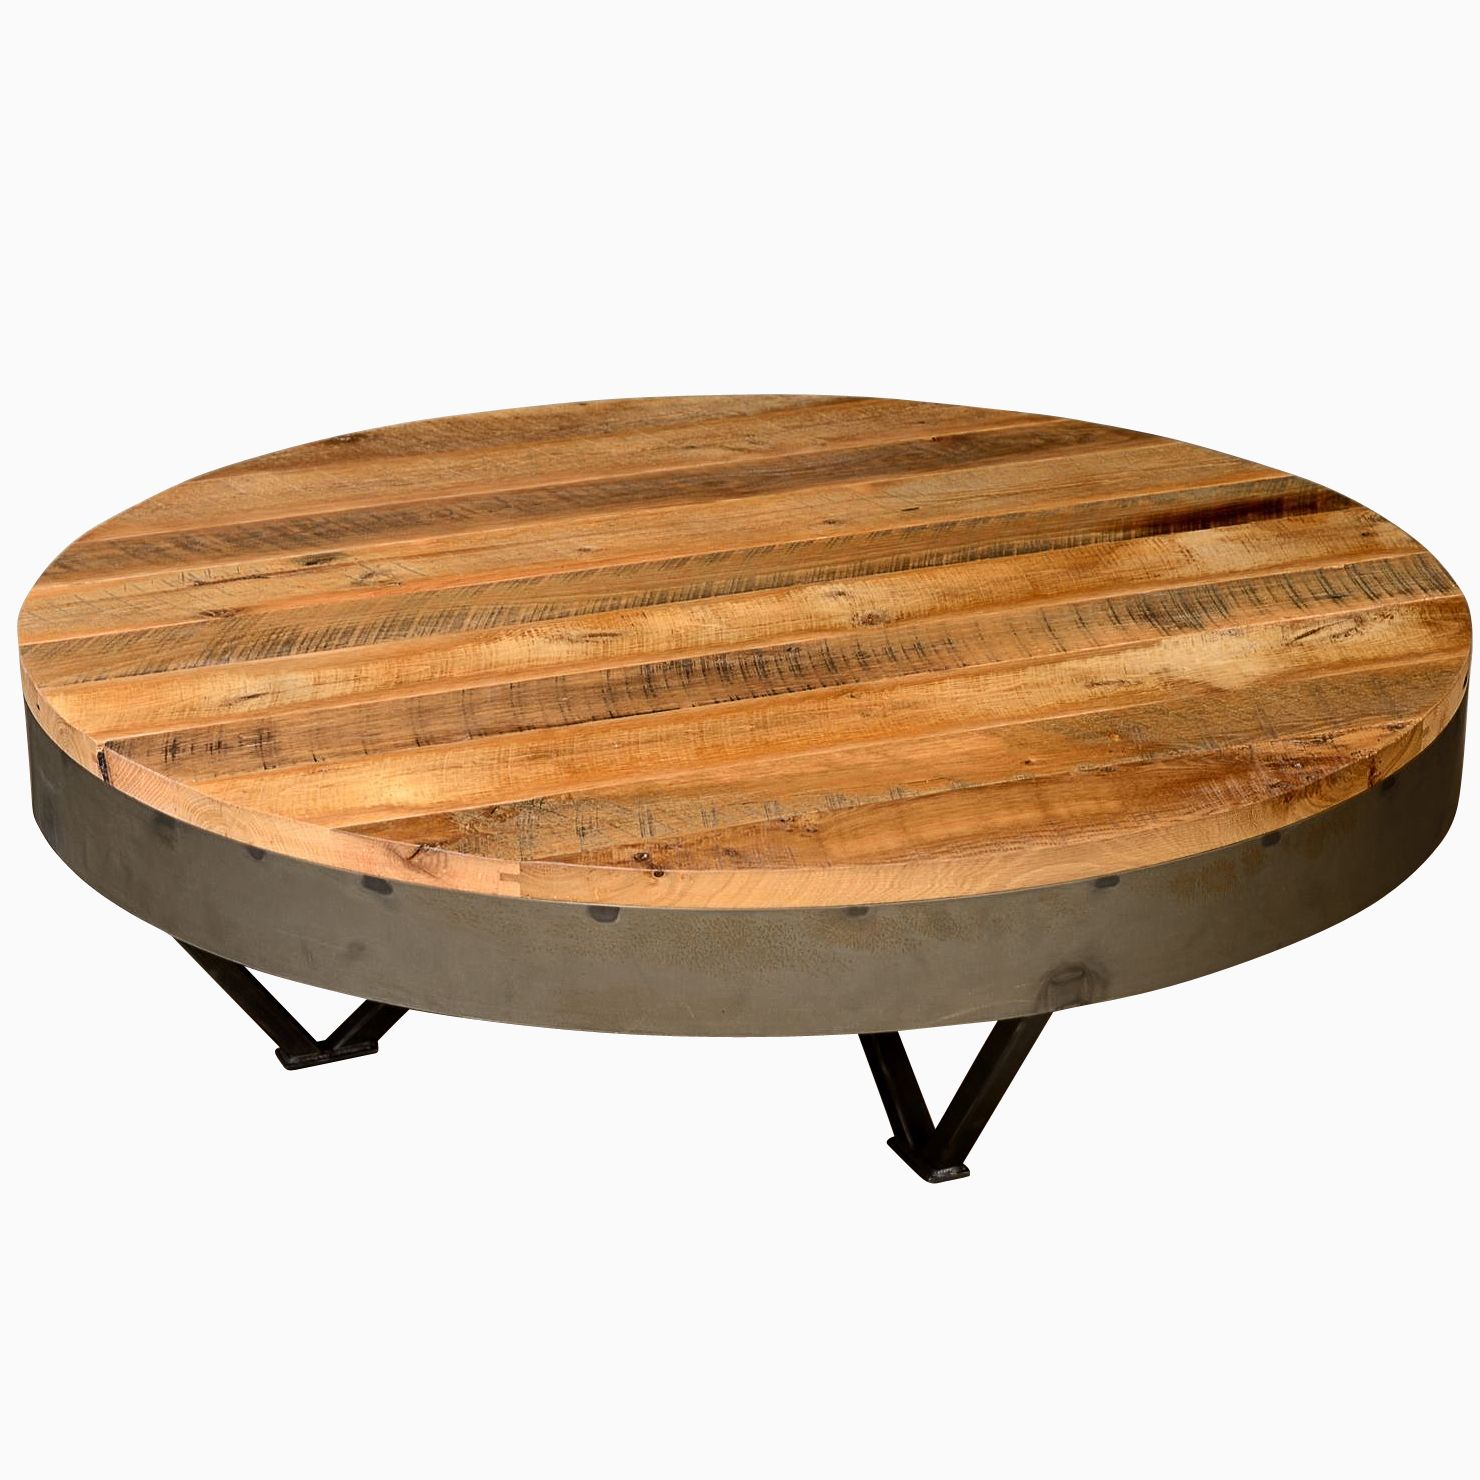 Custom Reclaimed Barn Wood Coffee Table By Corl Design Ltd